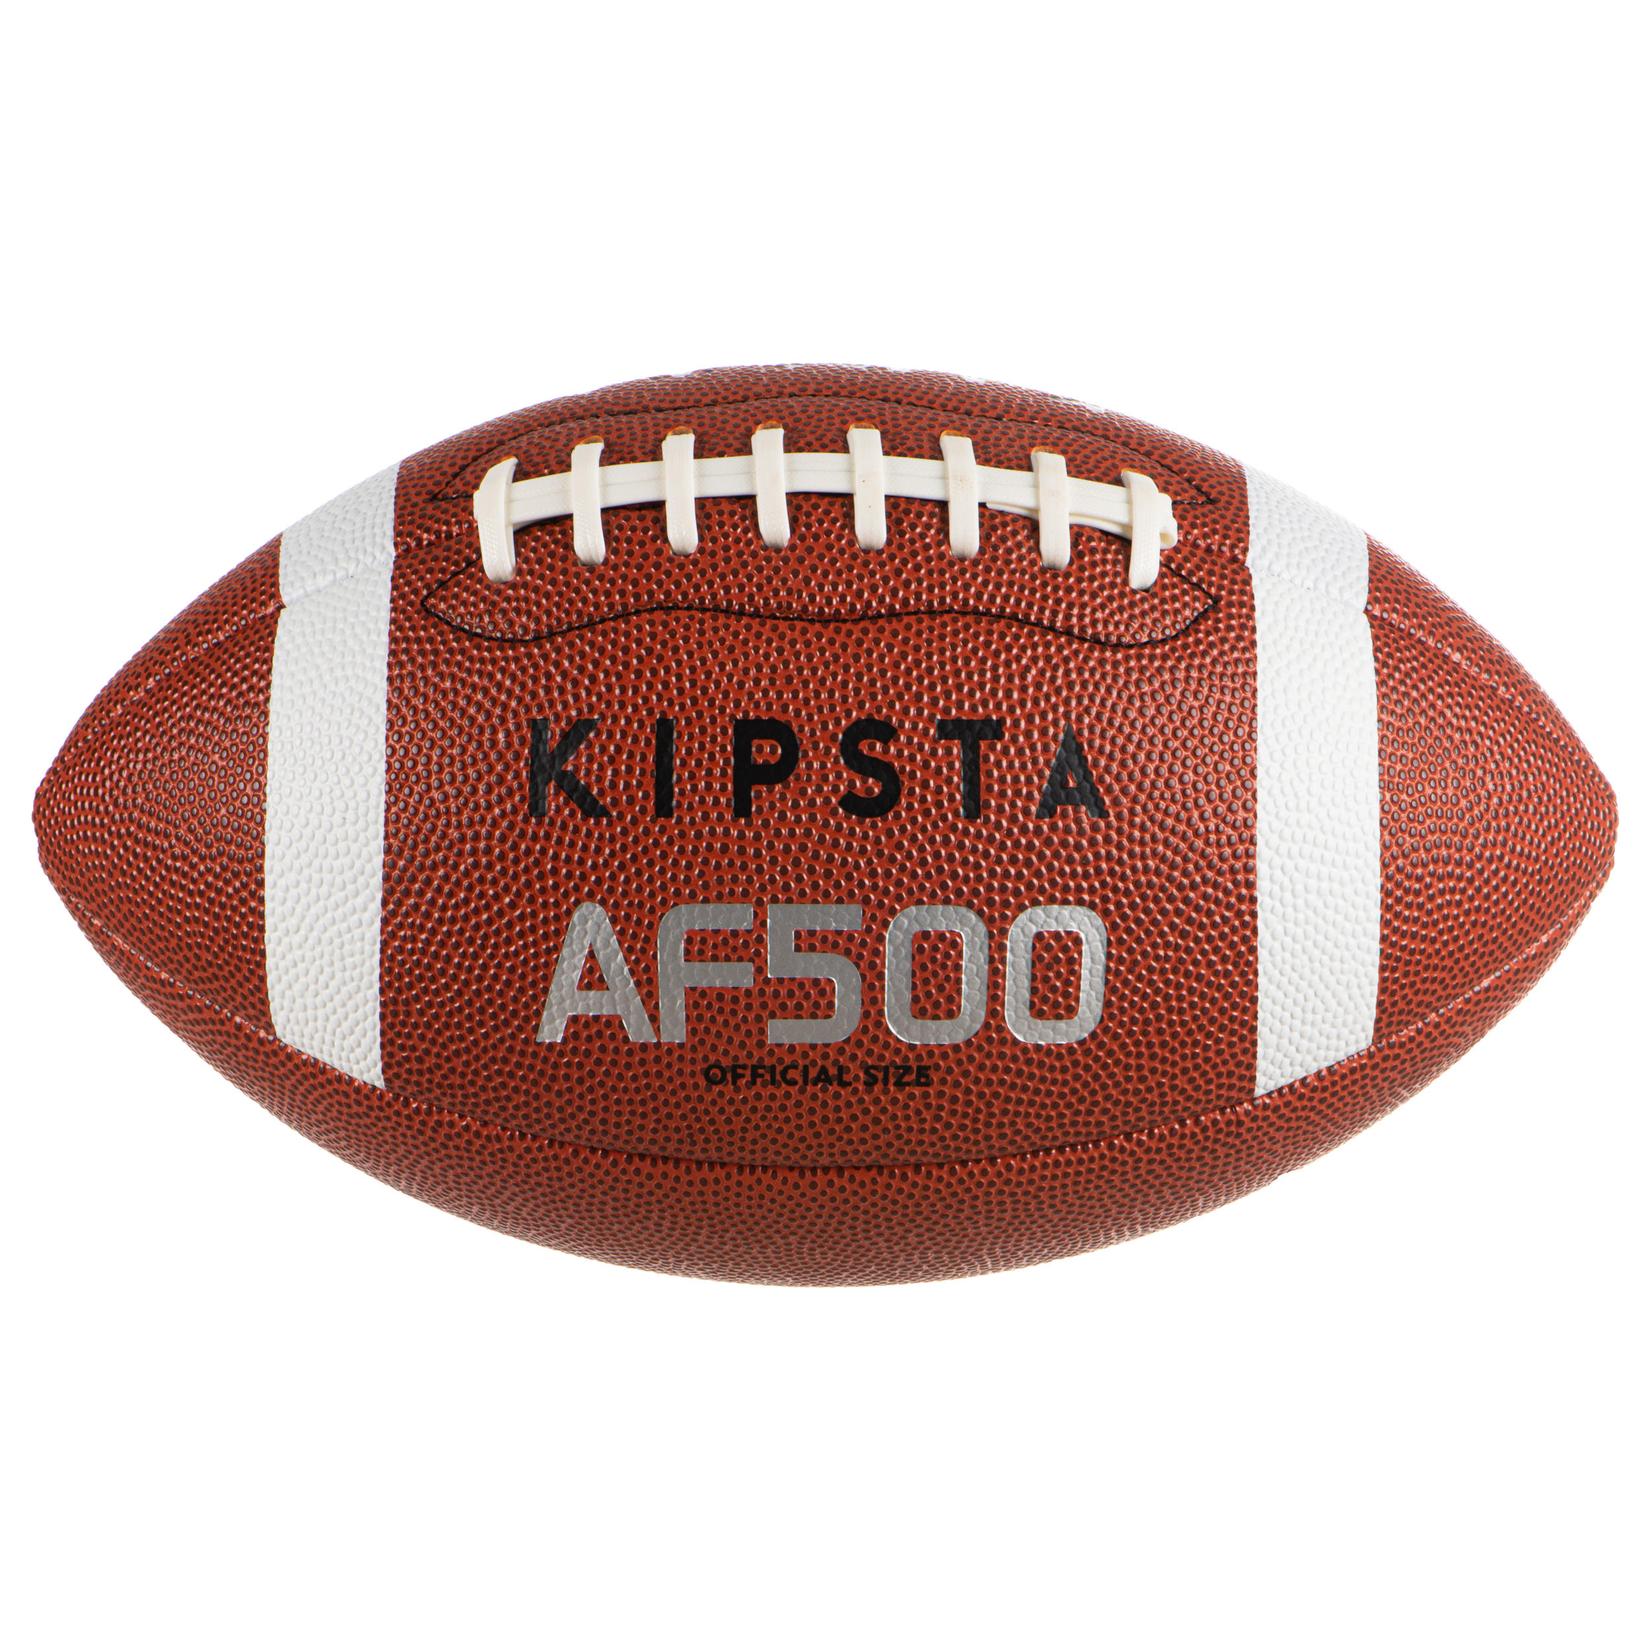 American Football Ball offizielle Grösse - AF500BOF braun für 15,99€ in Decathlon